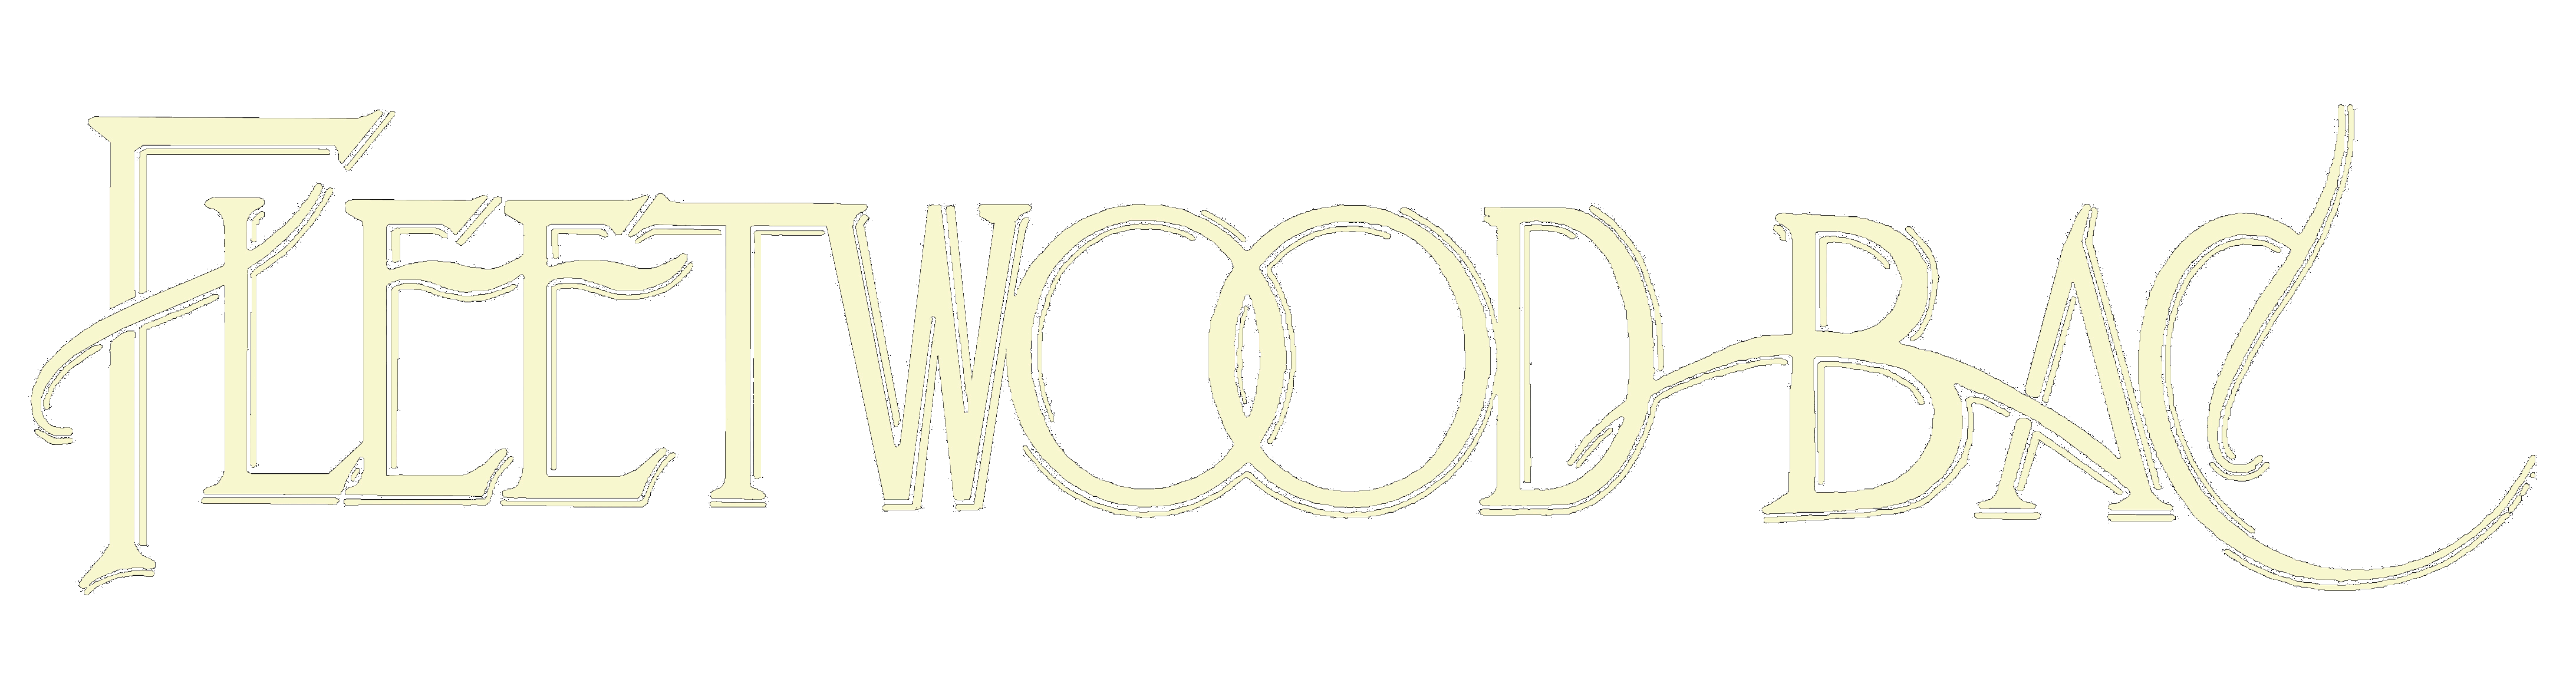 Fleetwood Mac Logo - Mac is Bac! – Fleetwood Bac : The world's first and UK's most ...